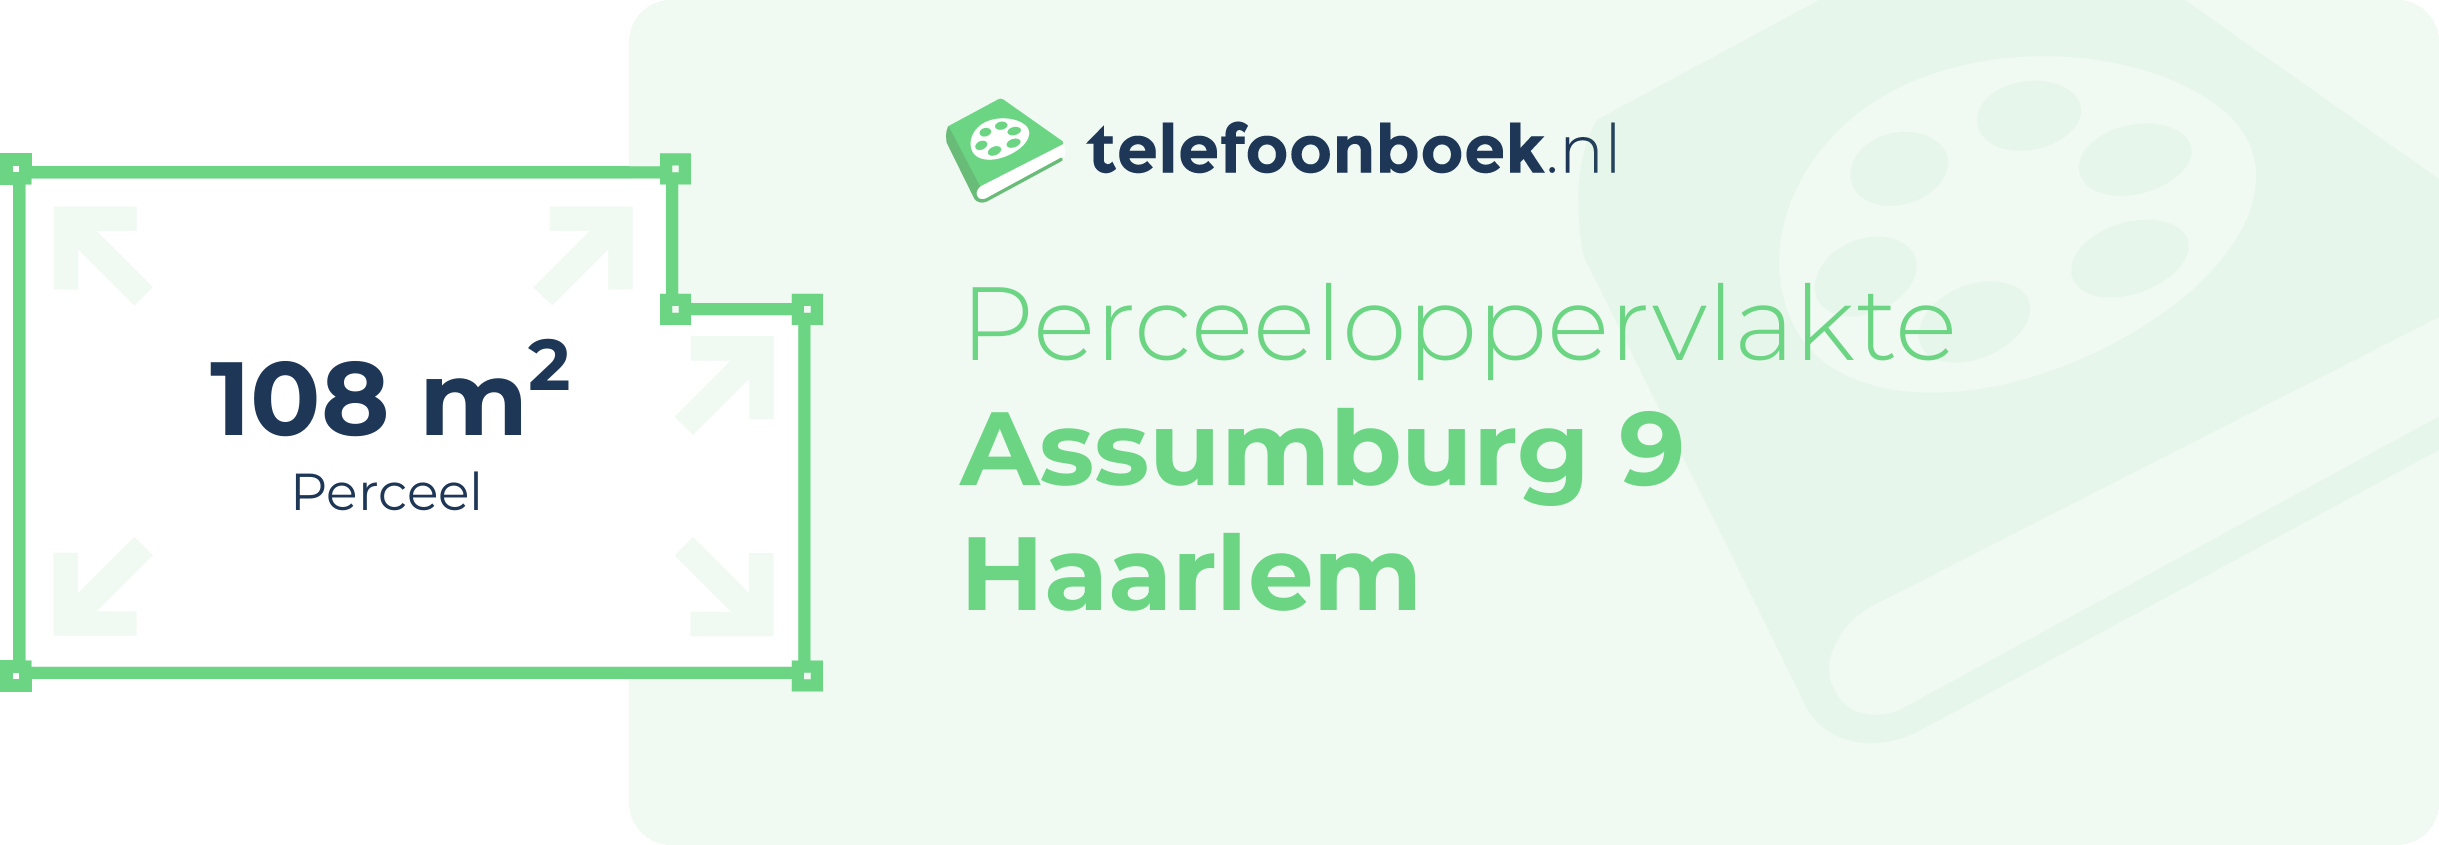 Perceeloppervlakte Assumburg 9 Haarlem